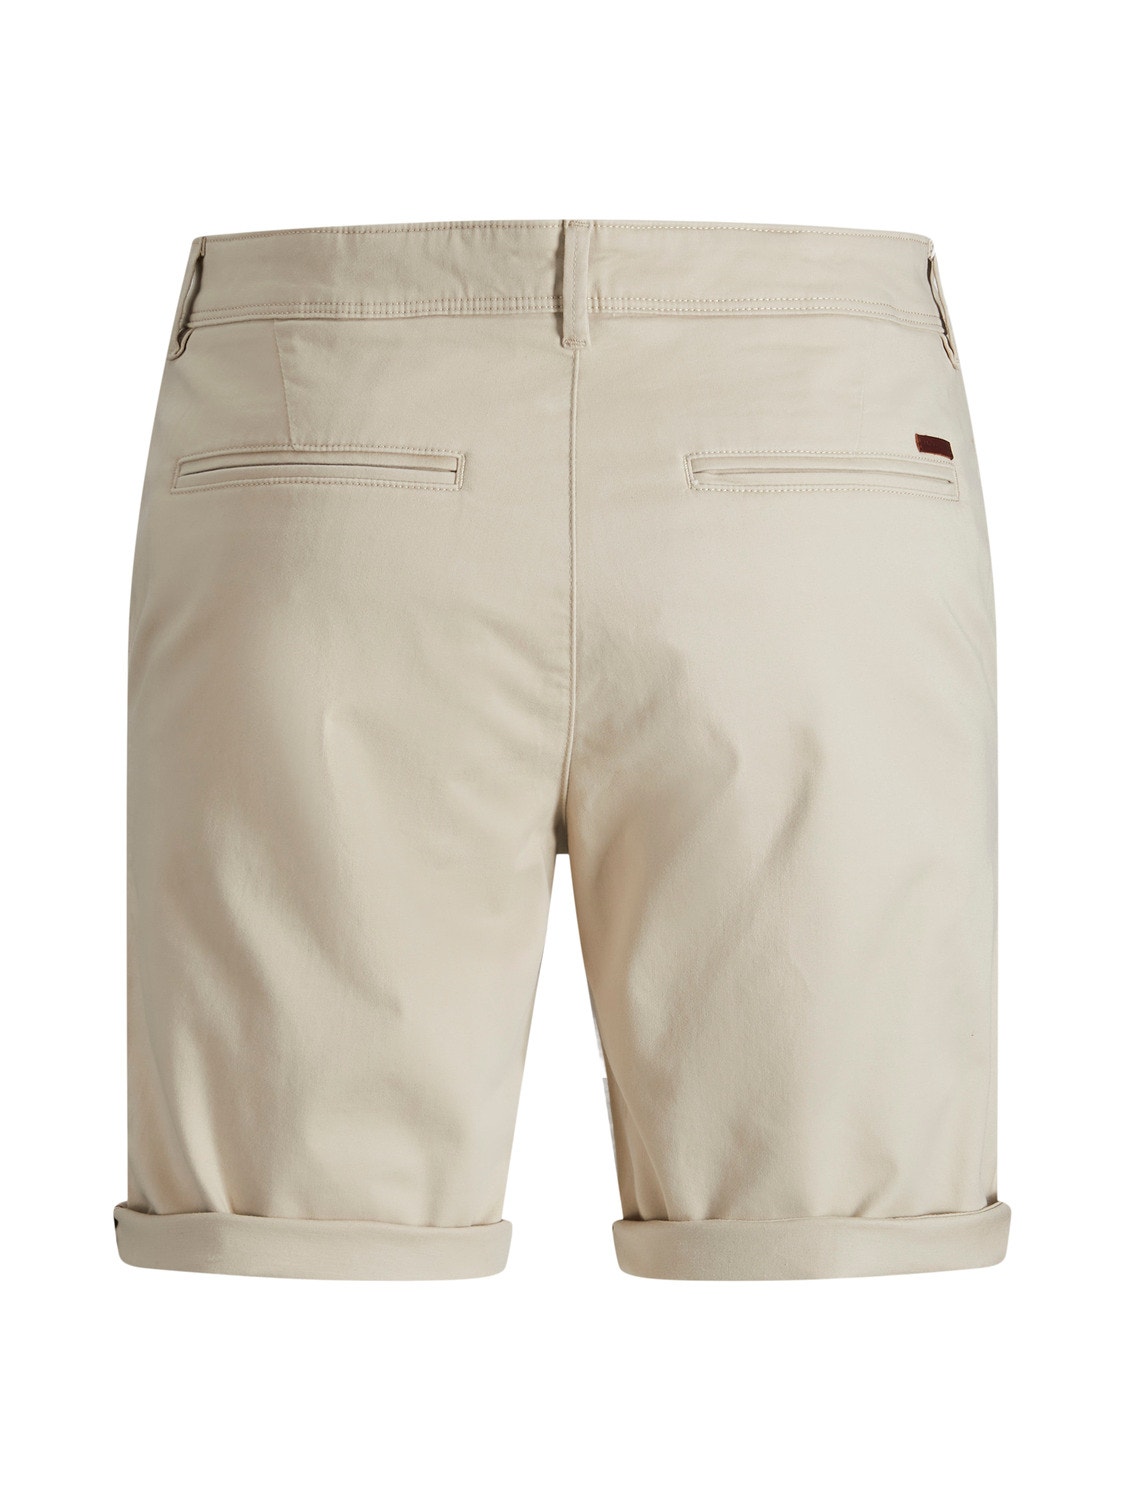 Jack & Jones Regular Fit Chino Shorts Für jungs -Oxford Tan - 12172213